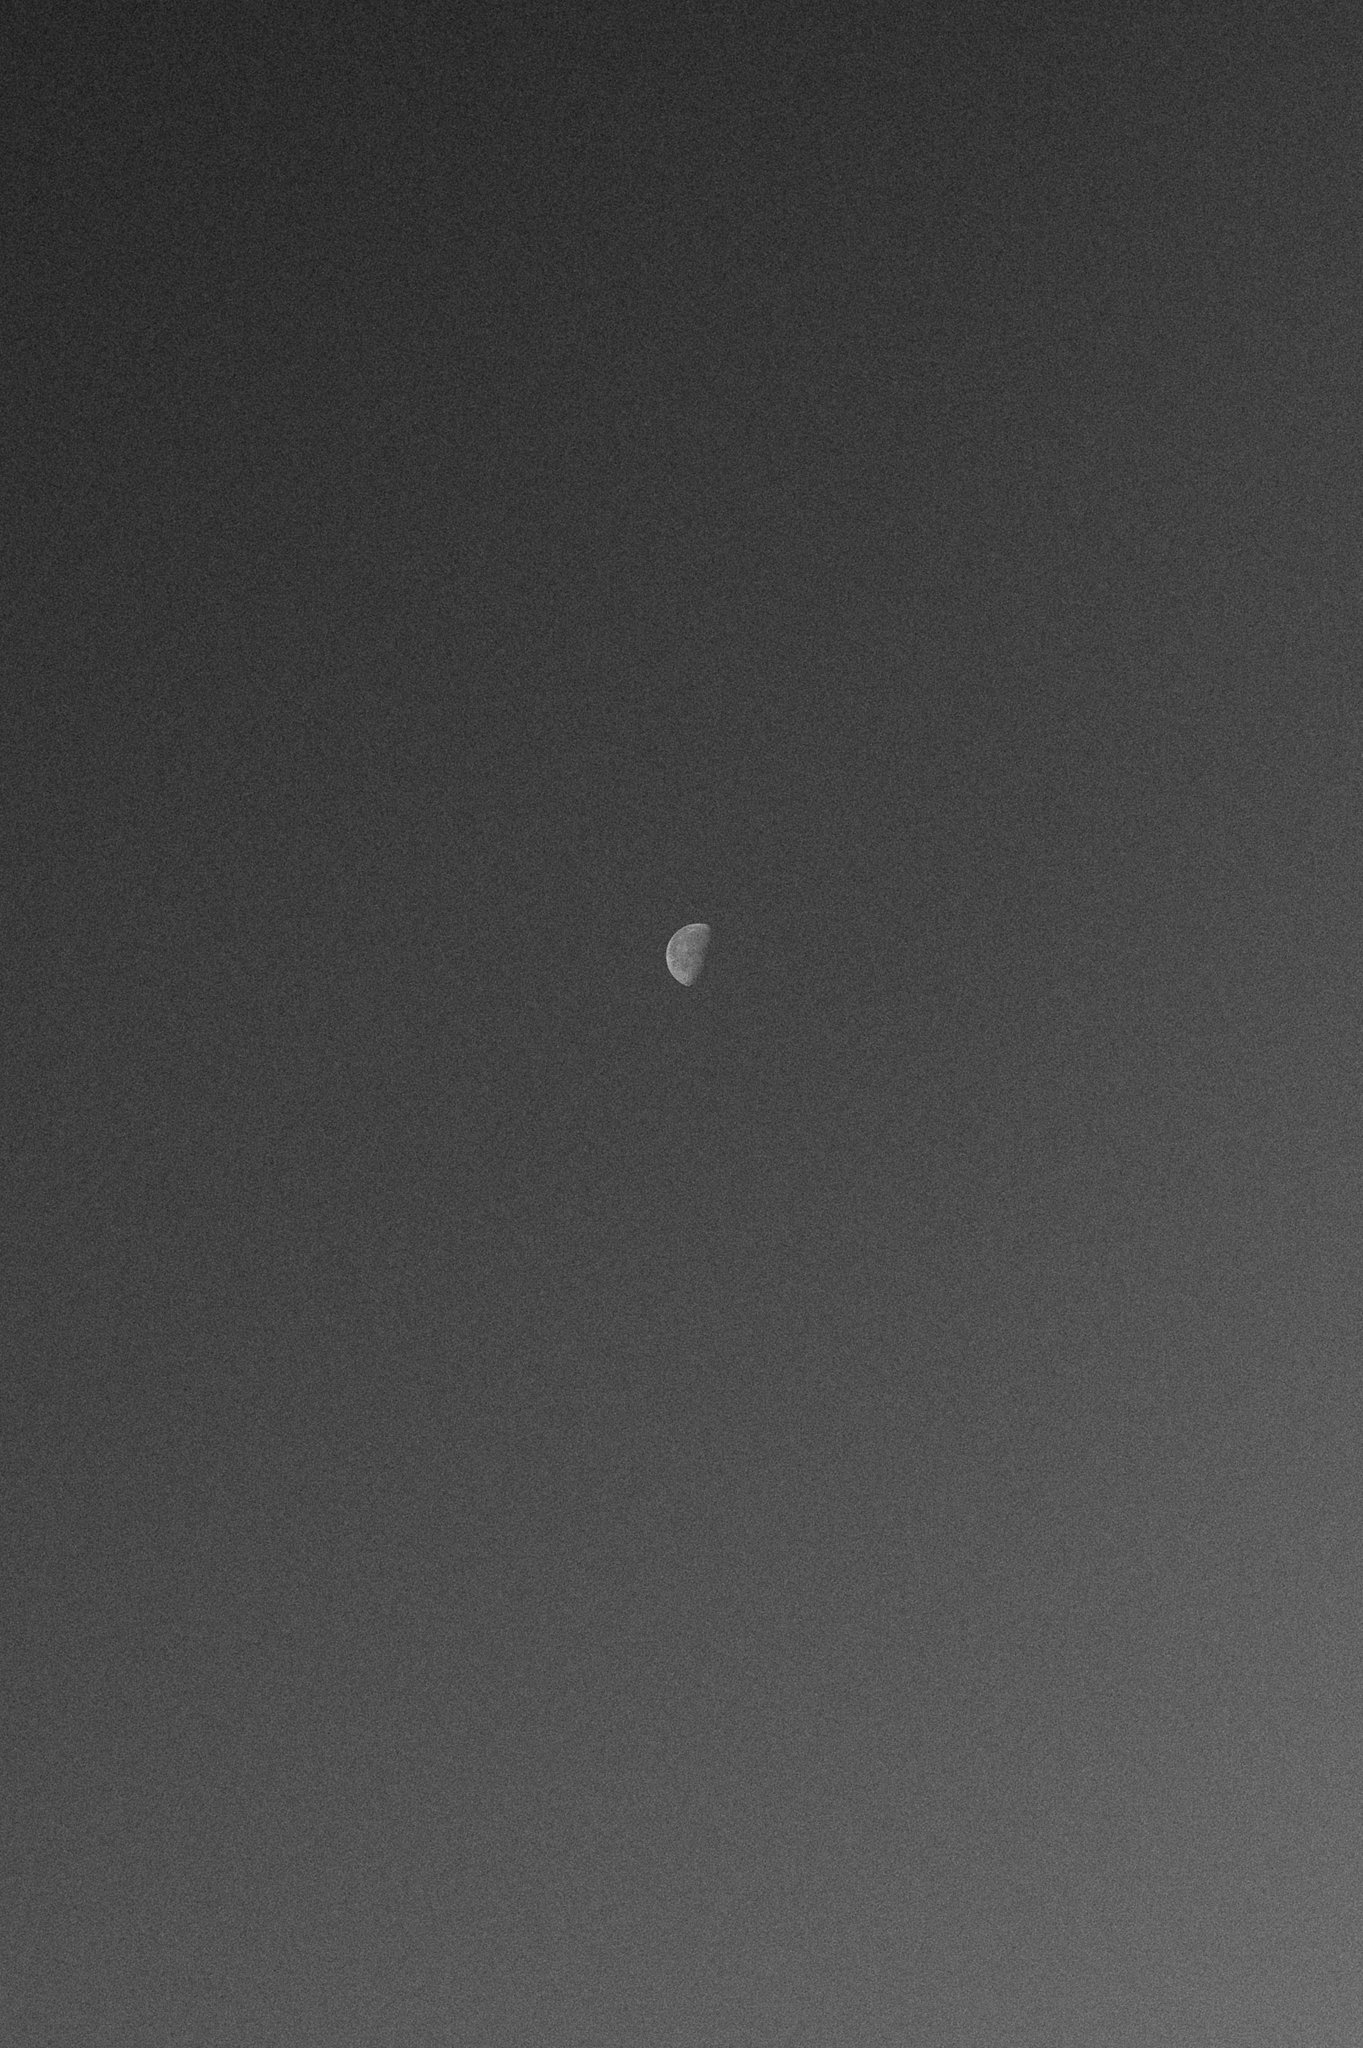 Grey sky with half moon